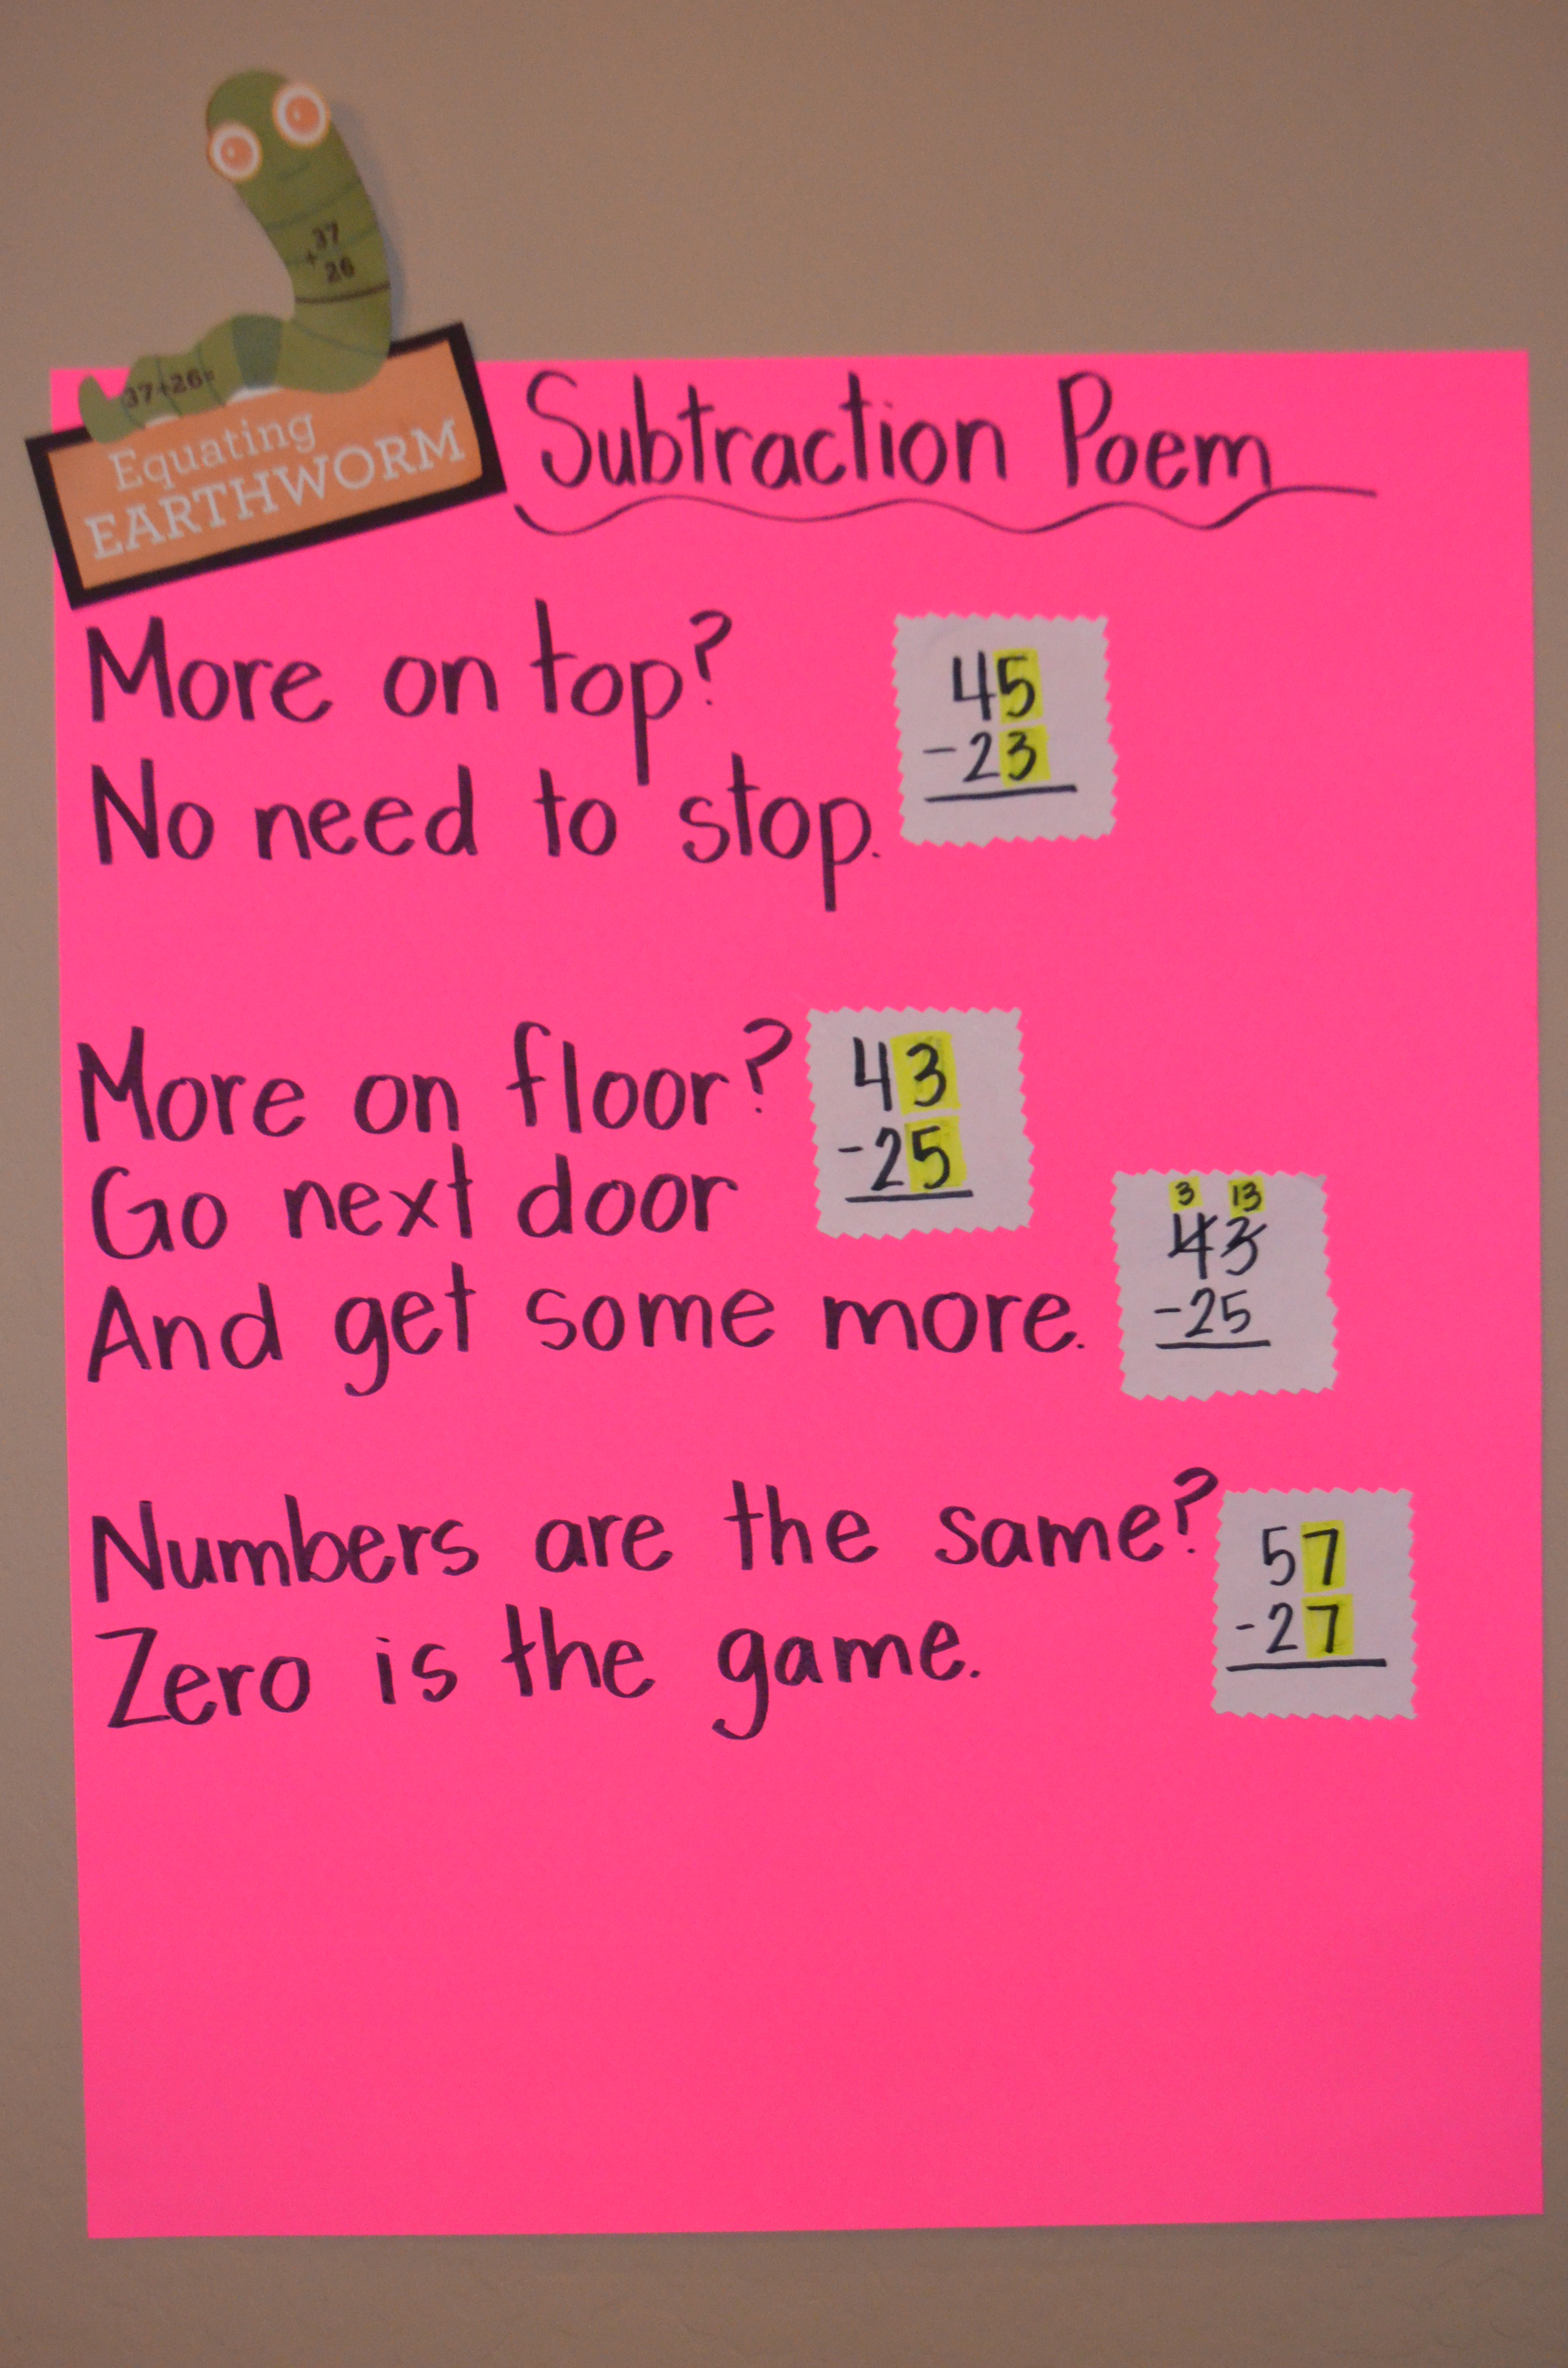 Subtraction poem 2(emmy)